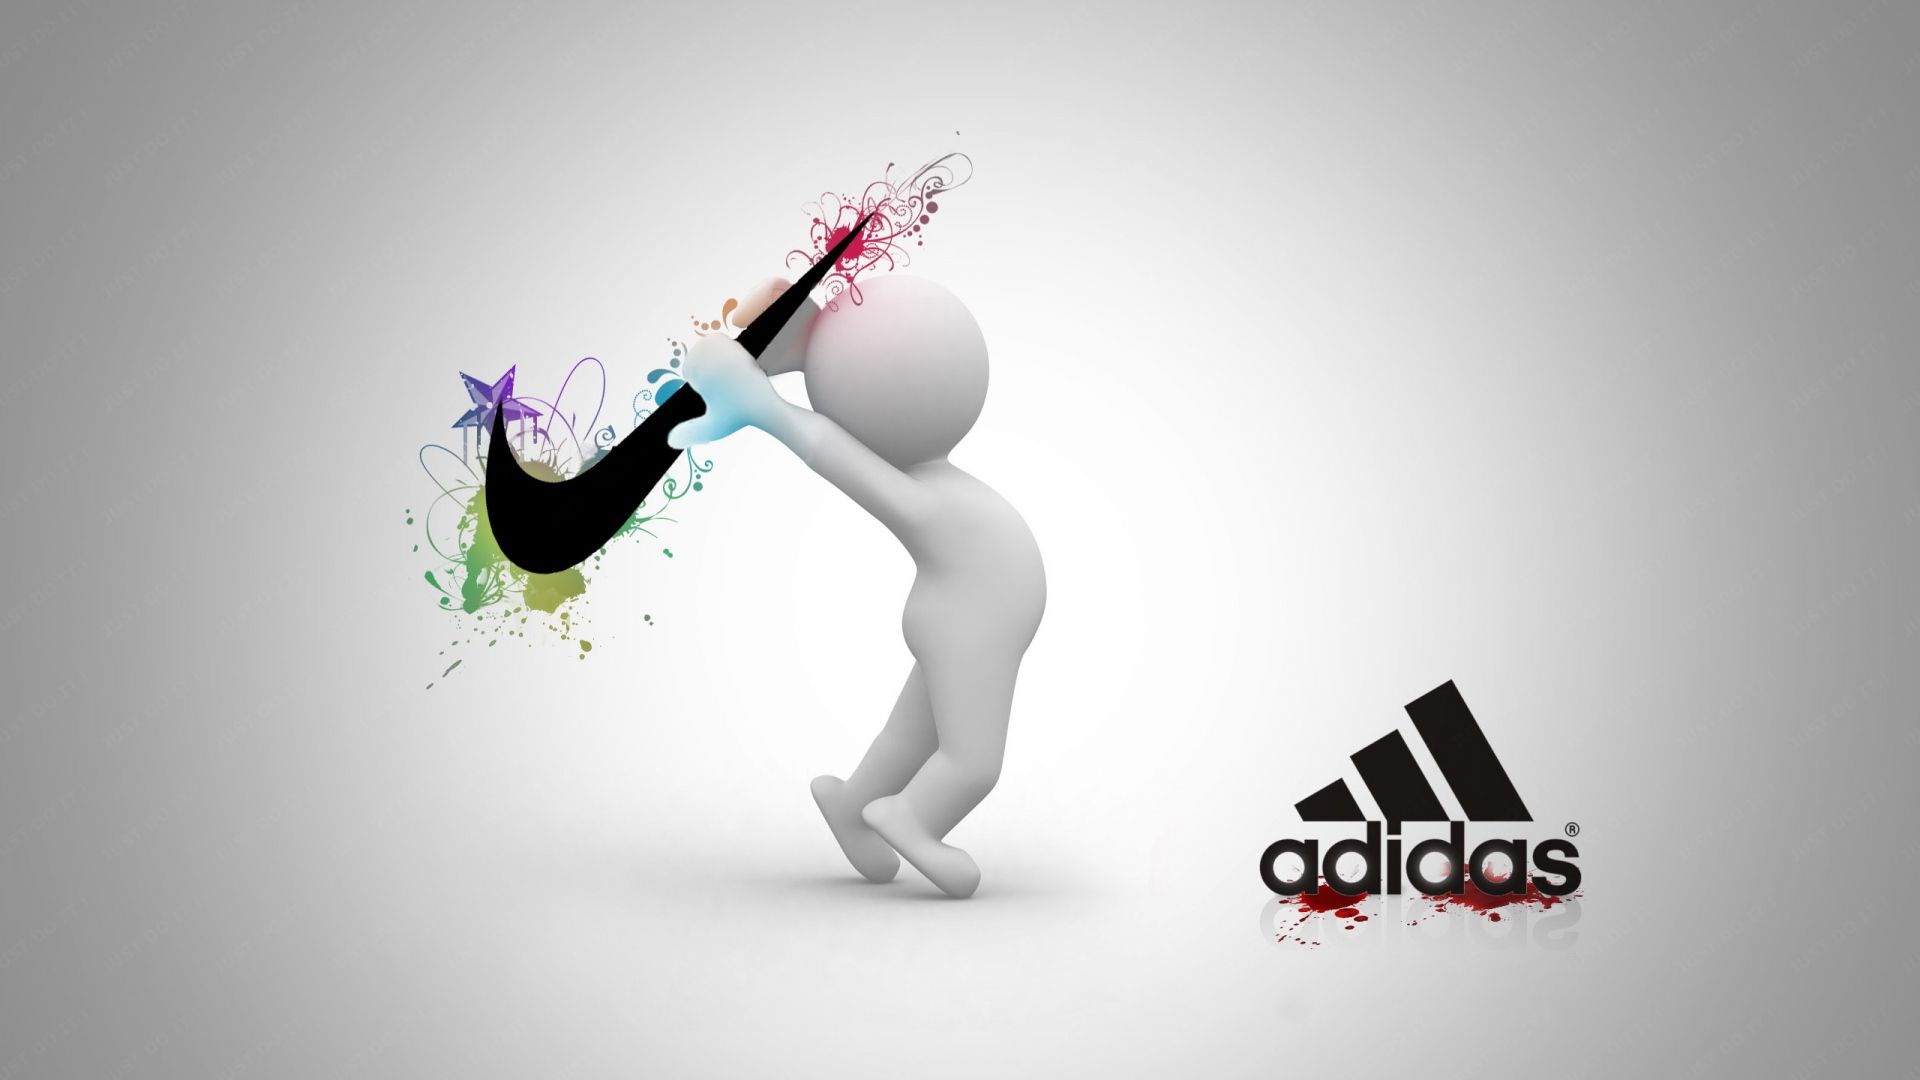 Adidas wallpaper by Telasm Best Wallpaper Full HD Free Download